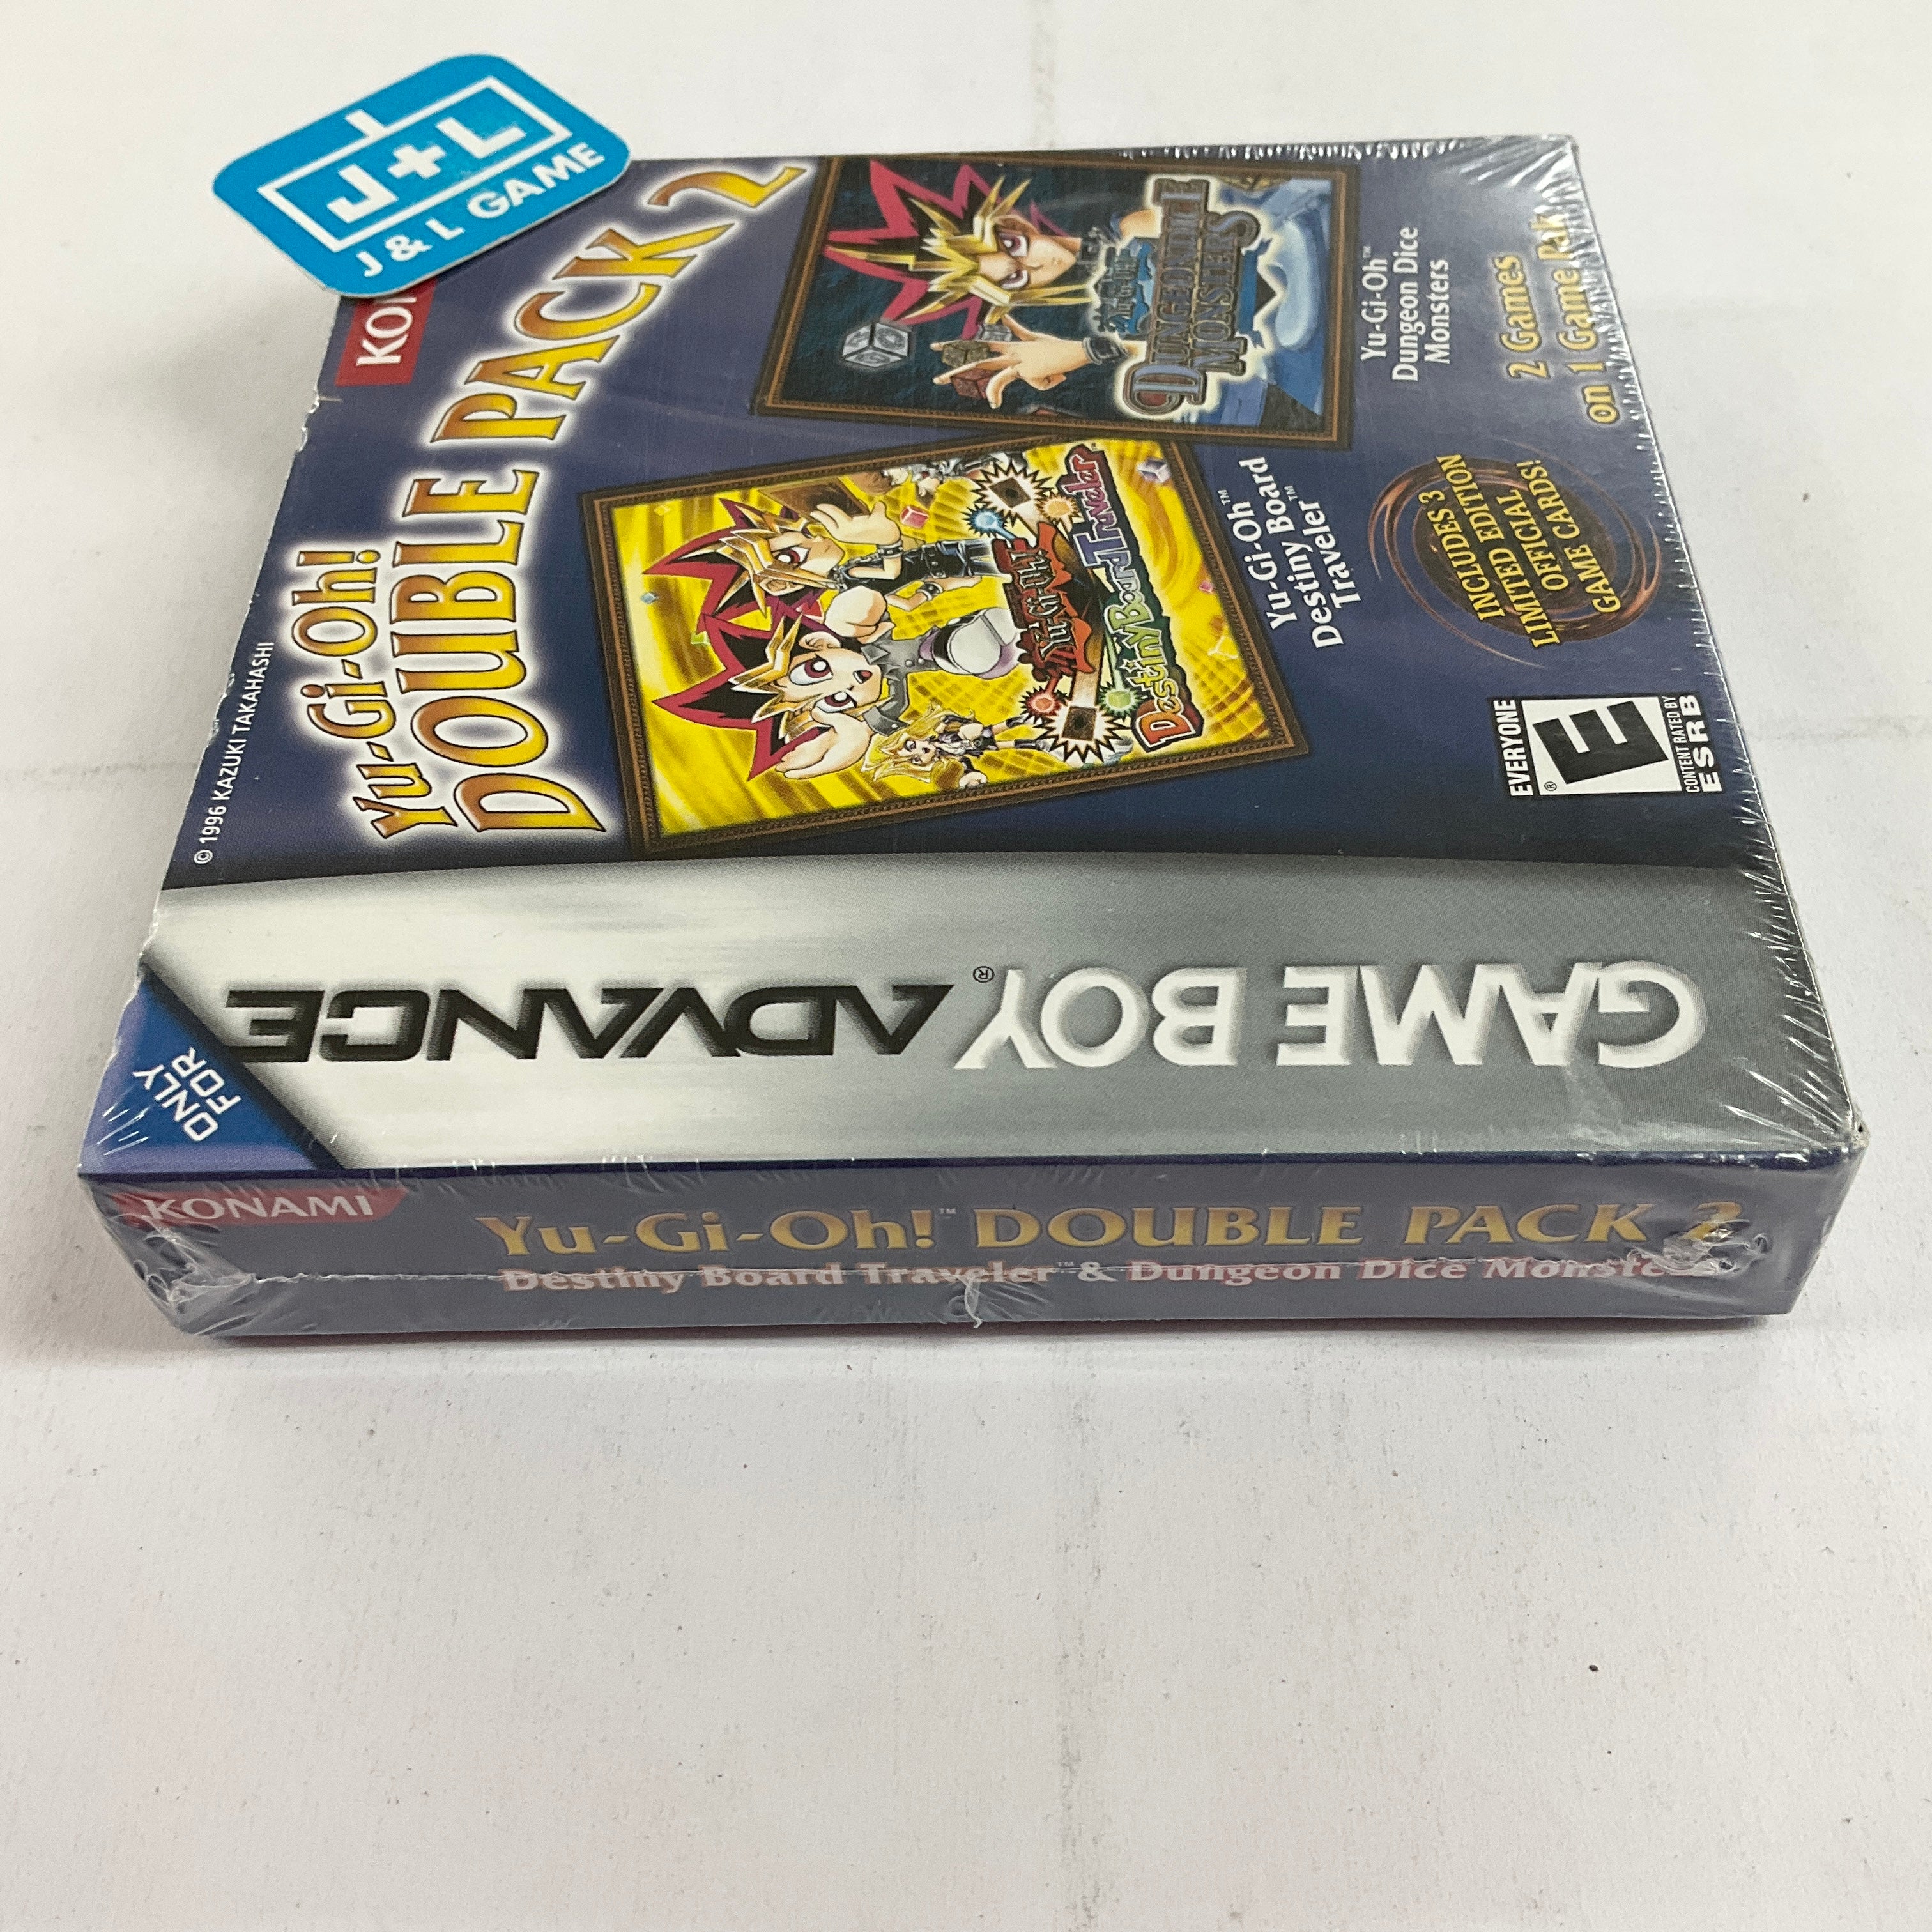 Yu-Gi-Oh! Double Pack 2 - (GBA) Game Boy Advance Video Games Konami   